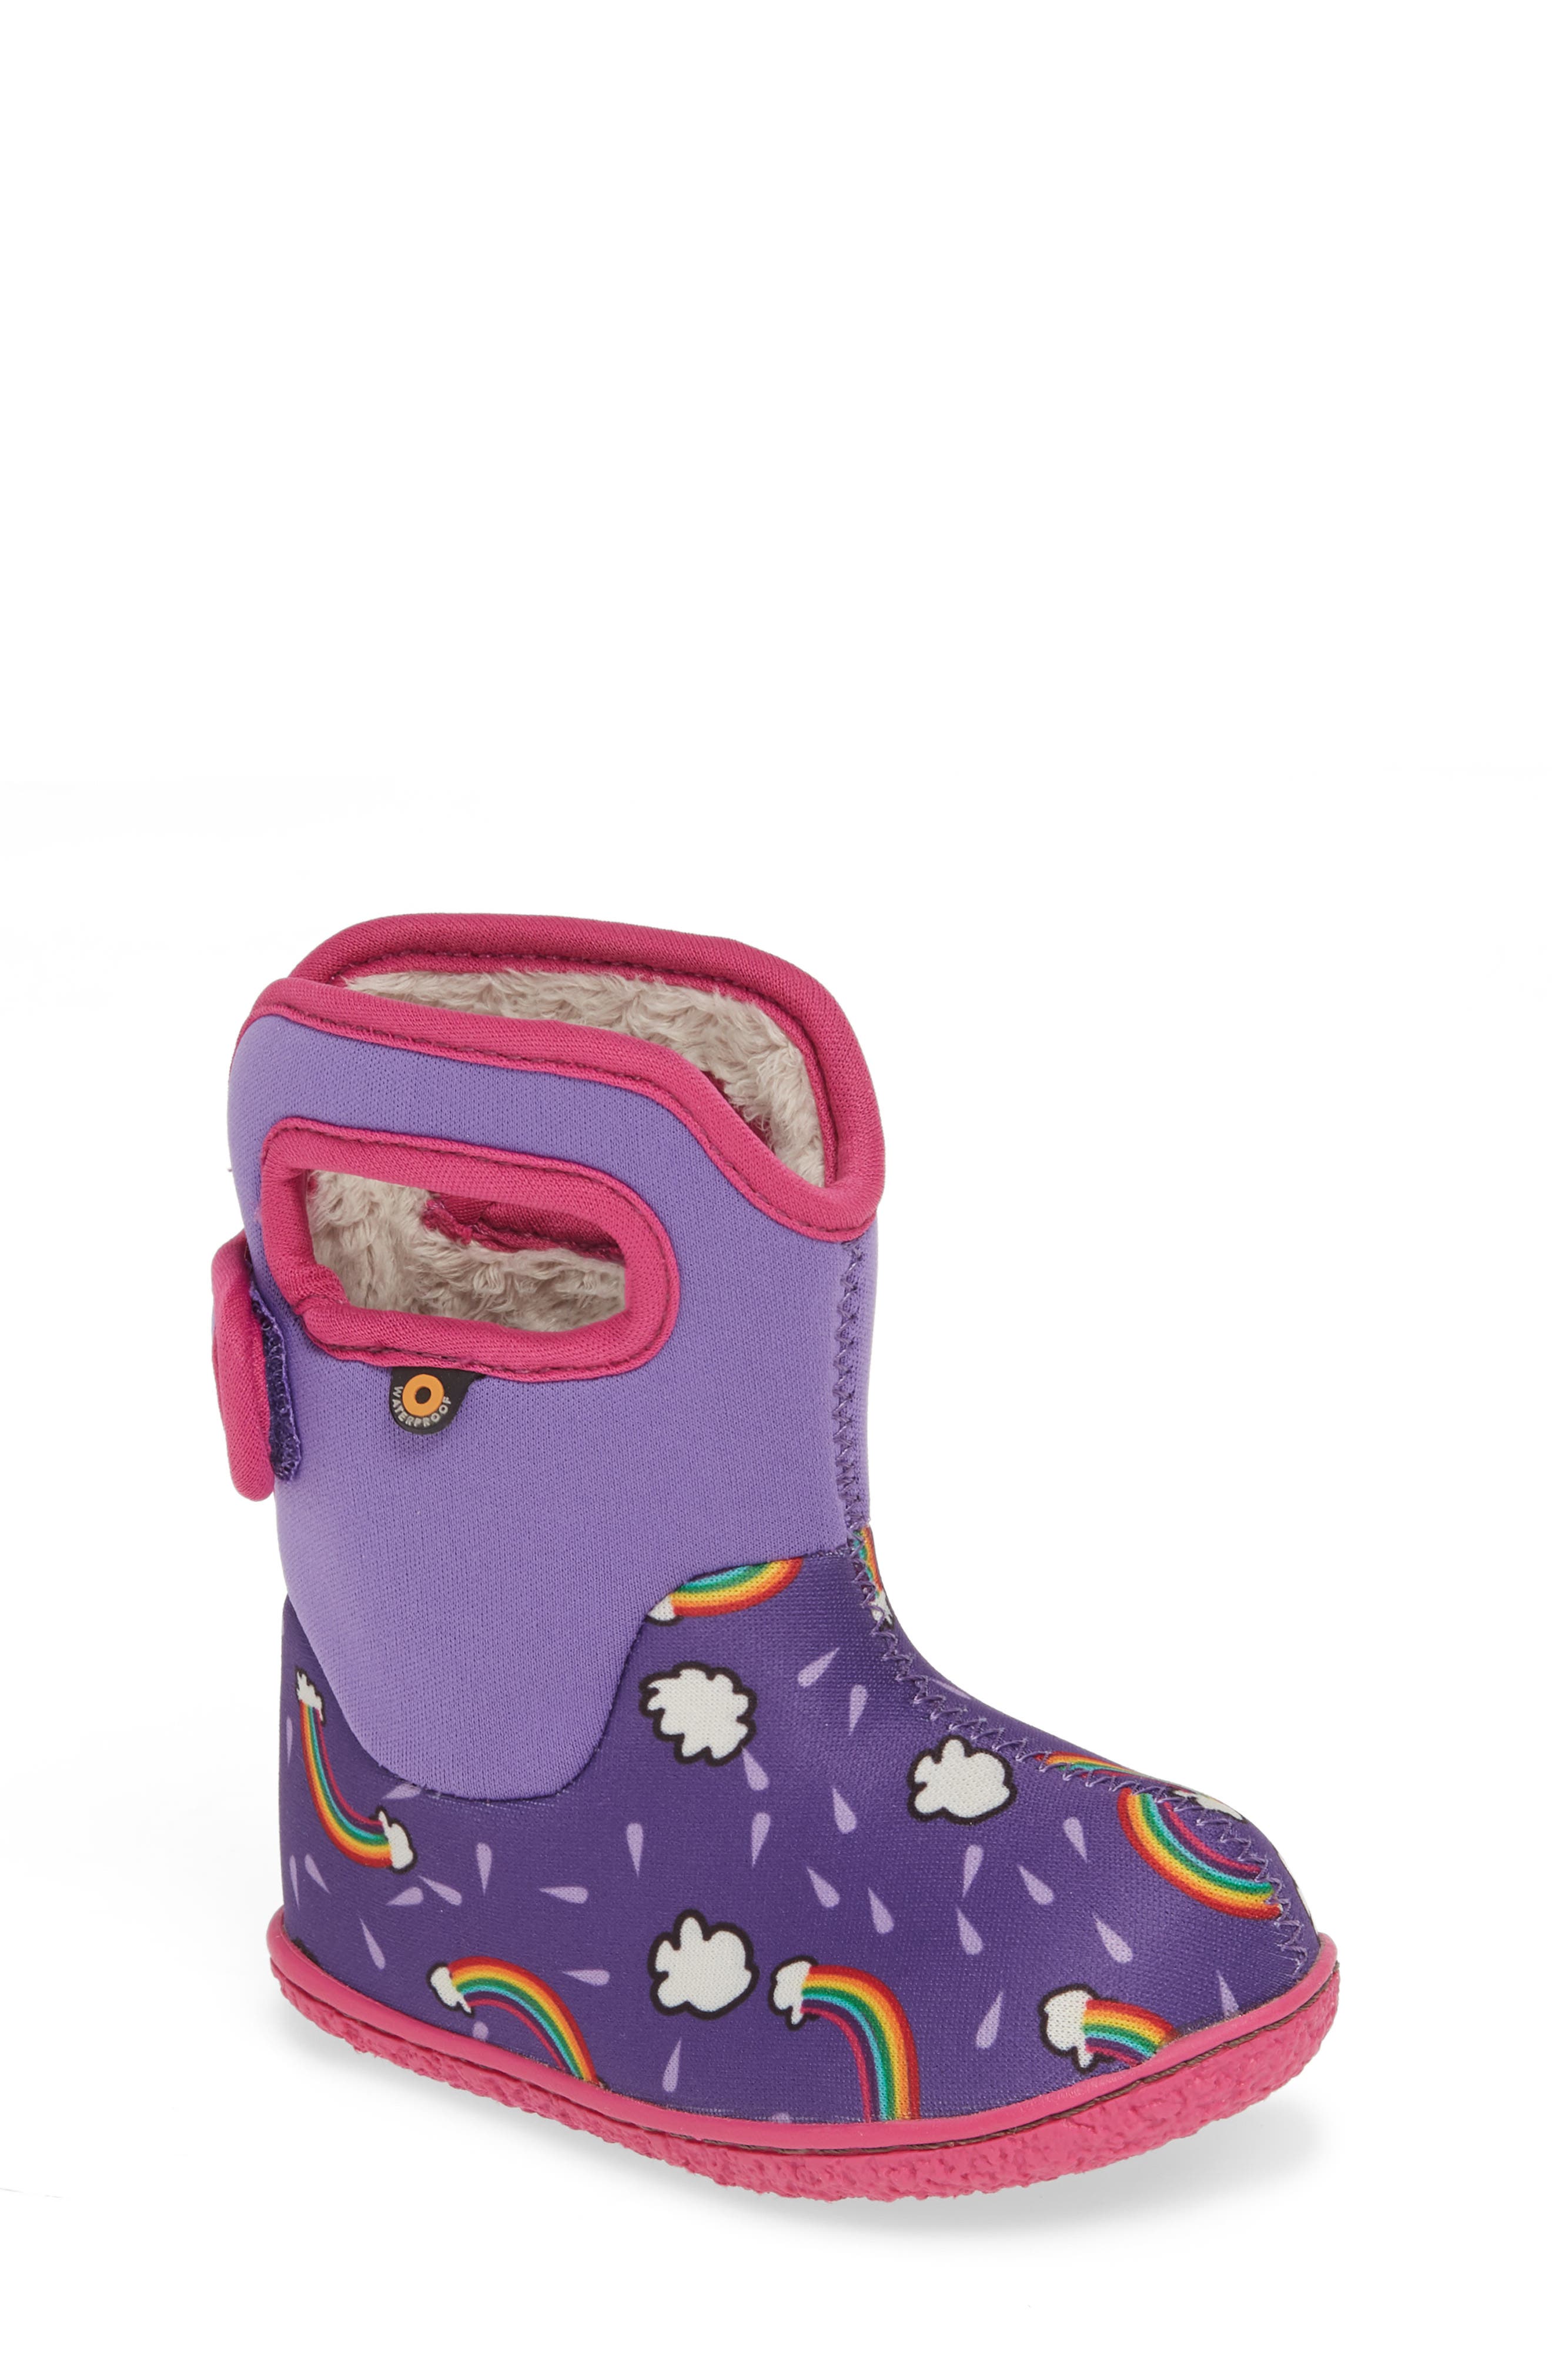 Anniversary Sale for Girls Rain Boots 